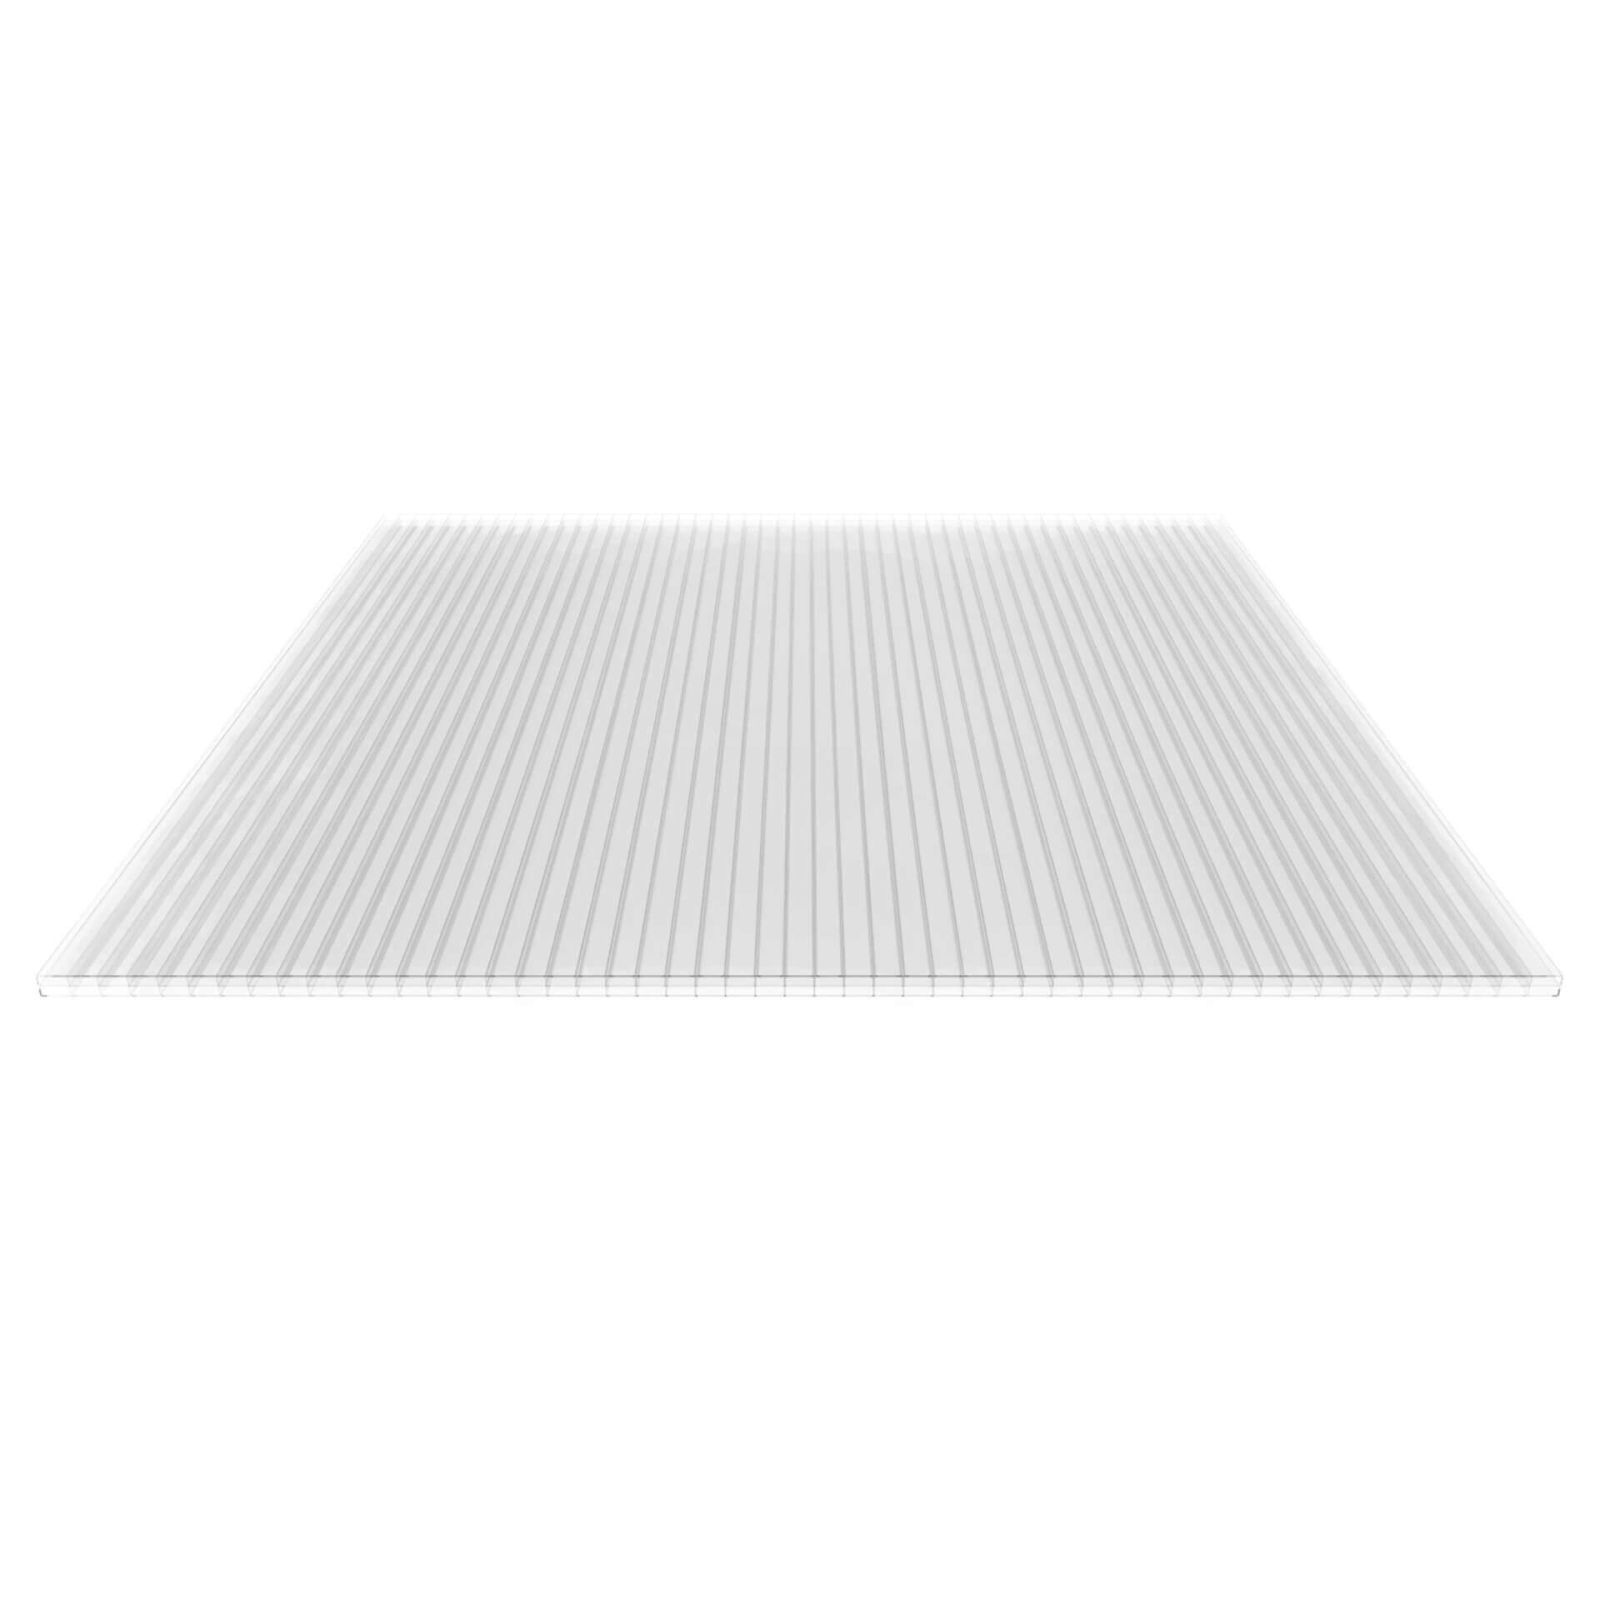 Polycarbonat Stegplatte | 16 mm | Breite 1200 mm | Glasklar | 500 mm